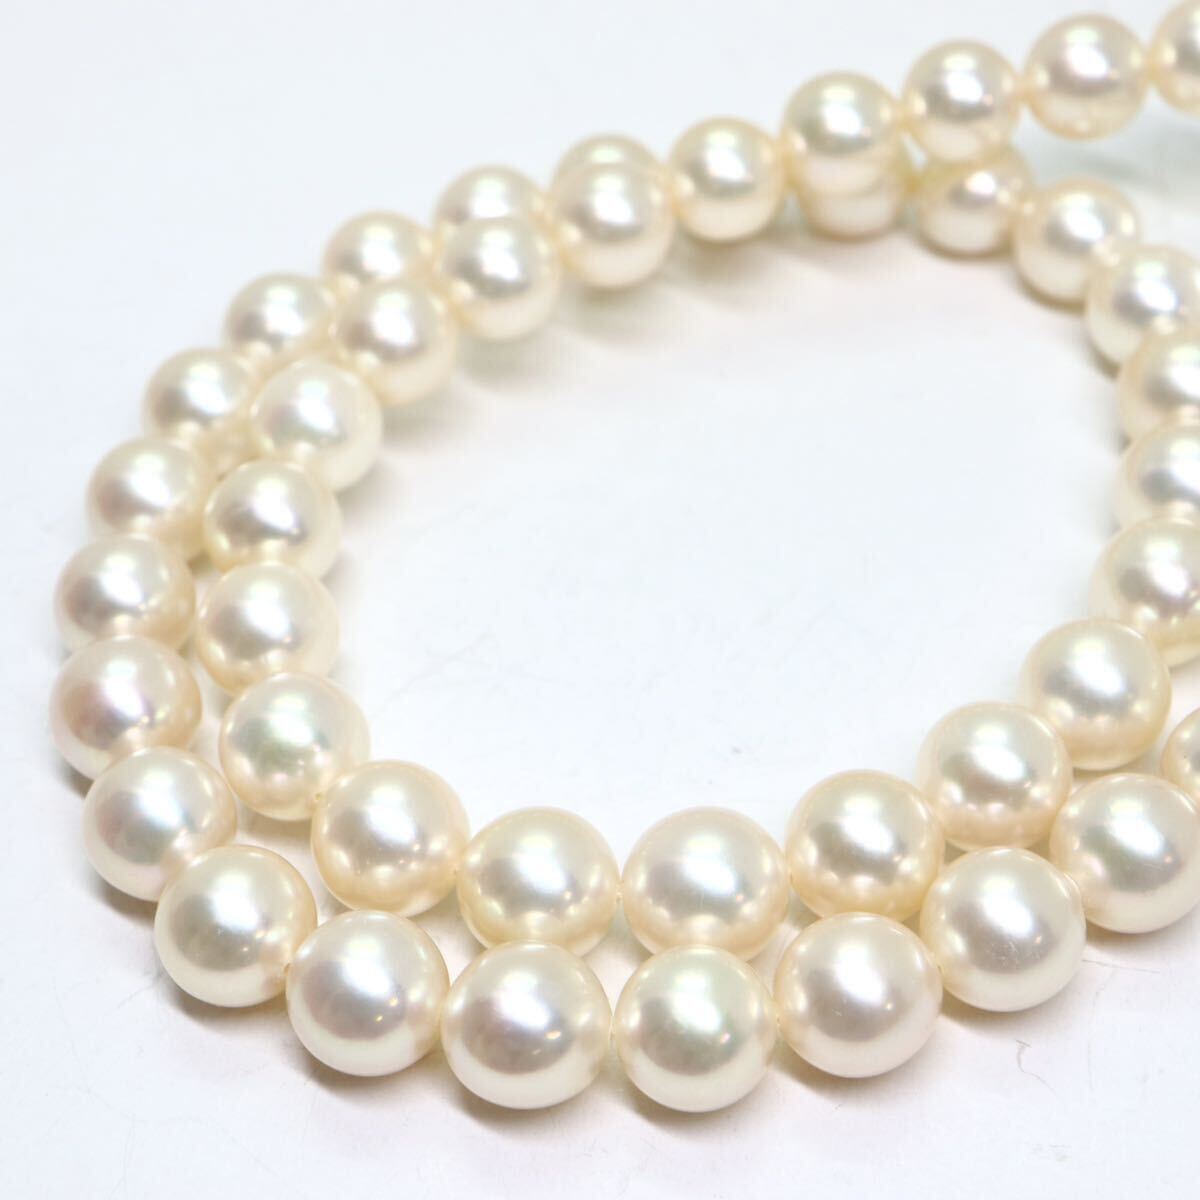 TASAKI(田崎真珠)《アコヤ本真珠ネックレス》A 約8.0-8.5mm珠 42.1g 約42cm pearl necklace ジュエリー jewelry ED0/ED0の画像4